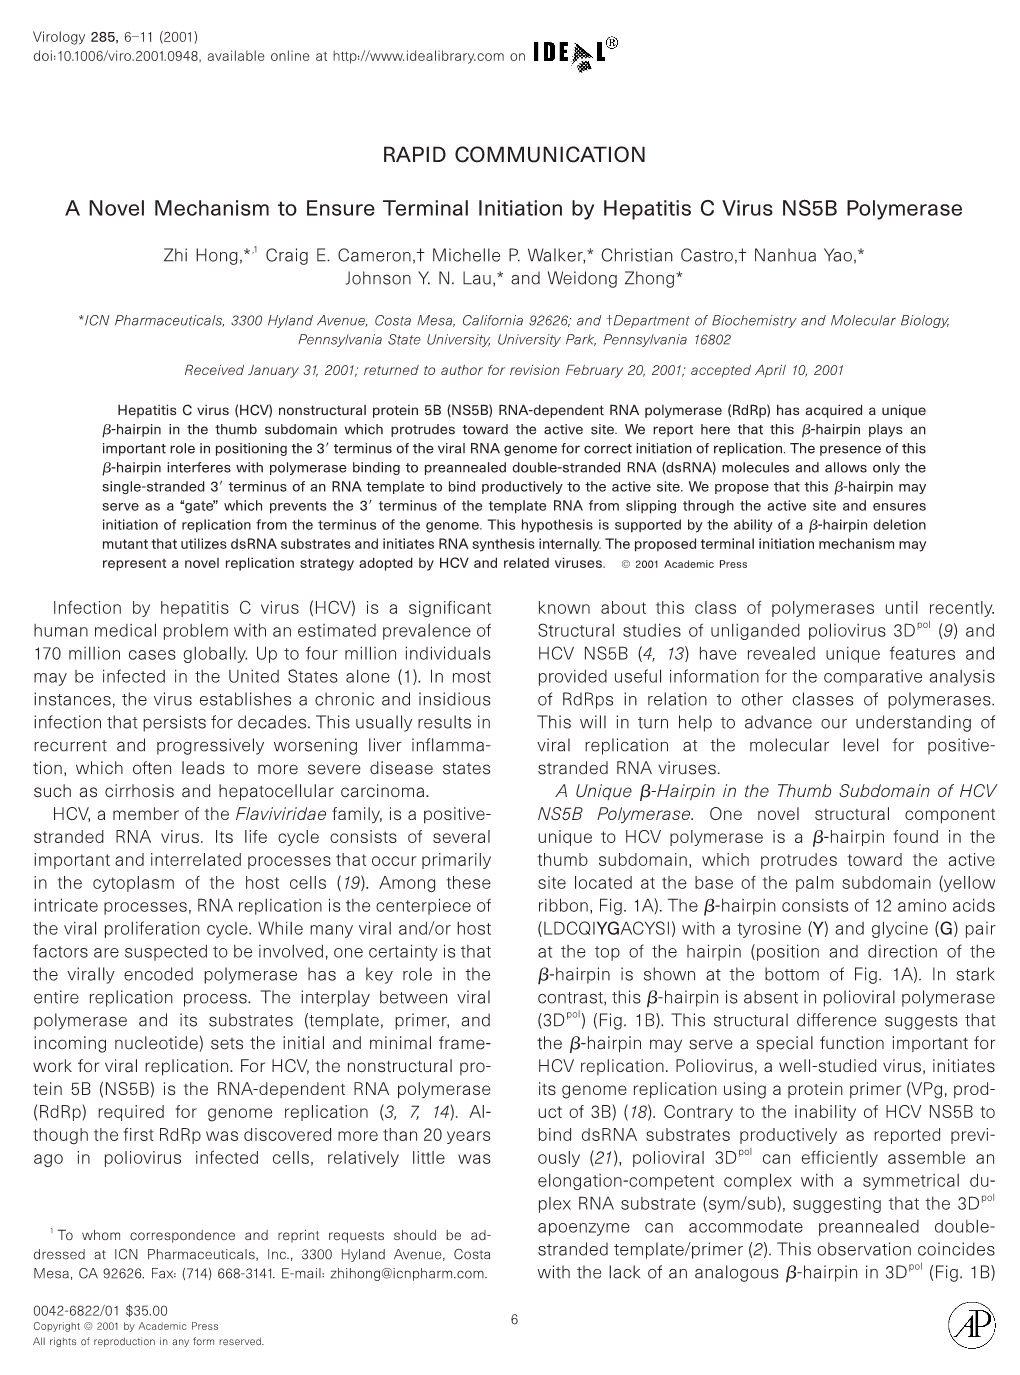 A Novel Mechanism to Ensure Terminal Initiation by Hepatitis C Virus NS5B Polymerase